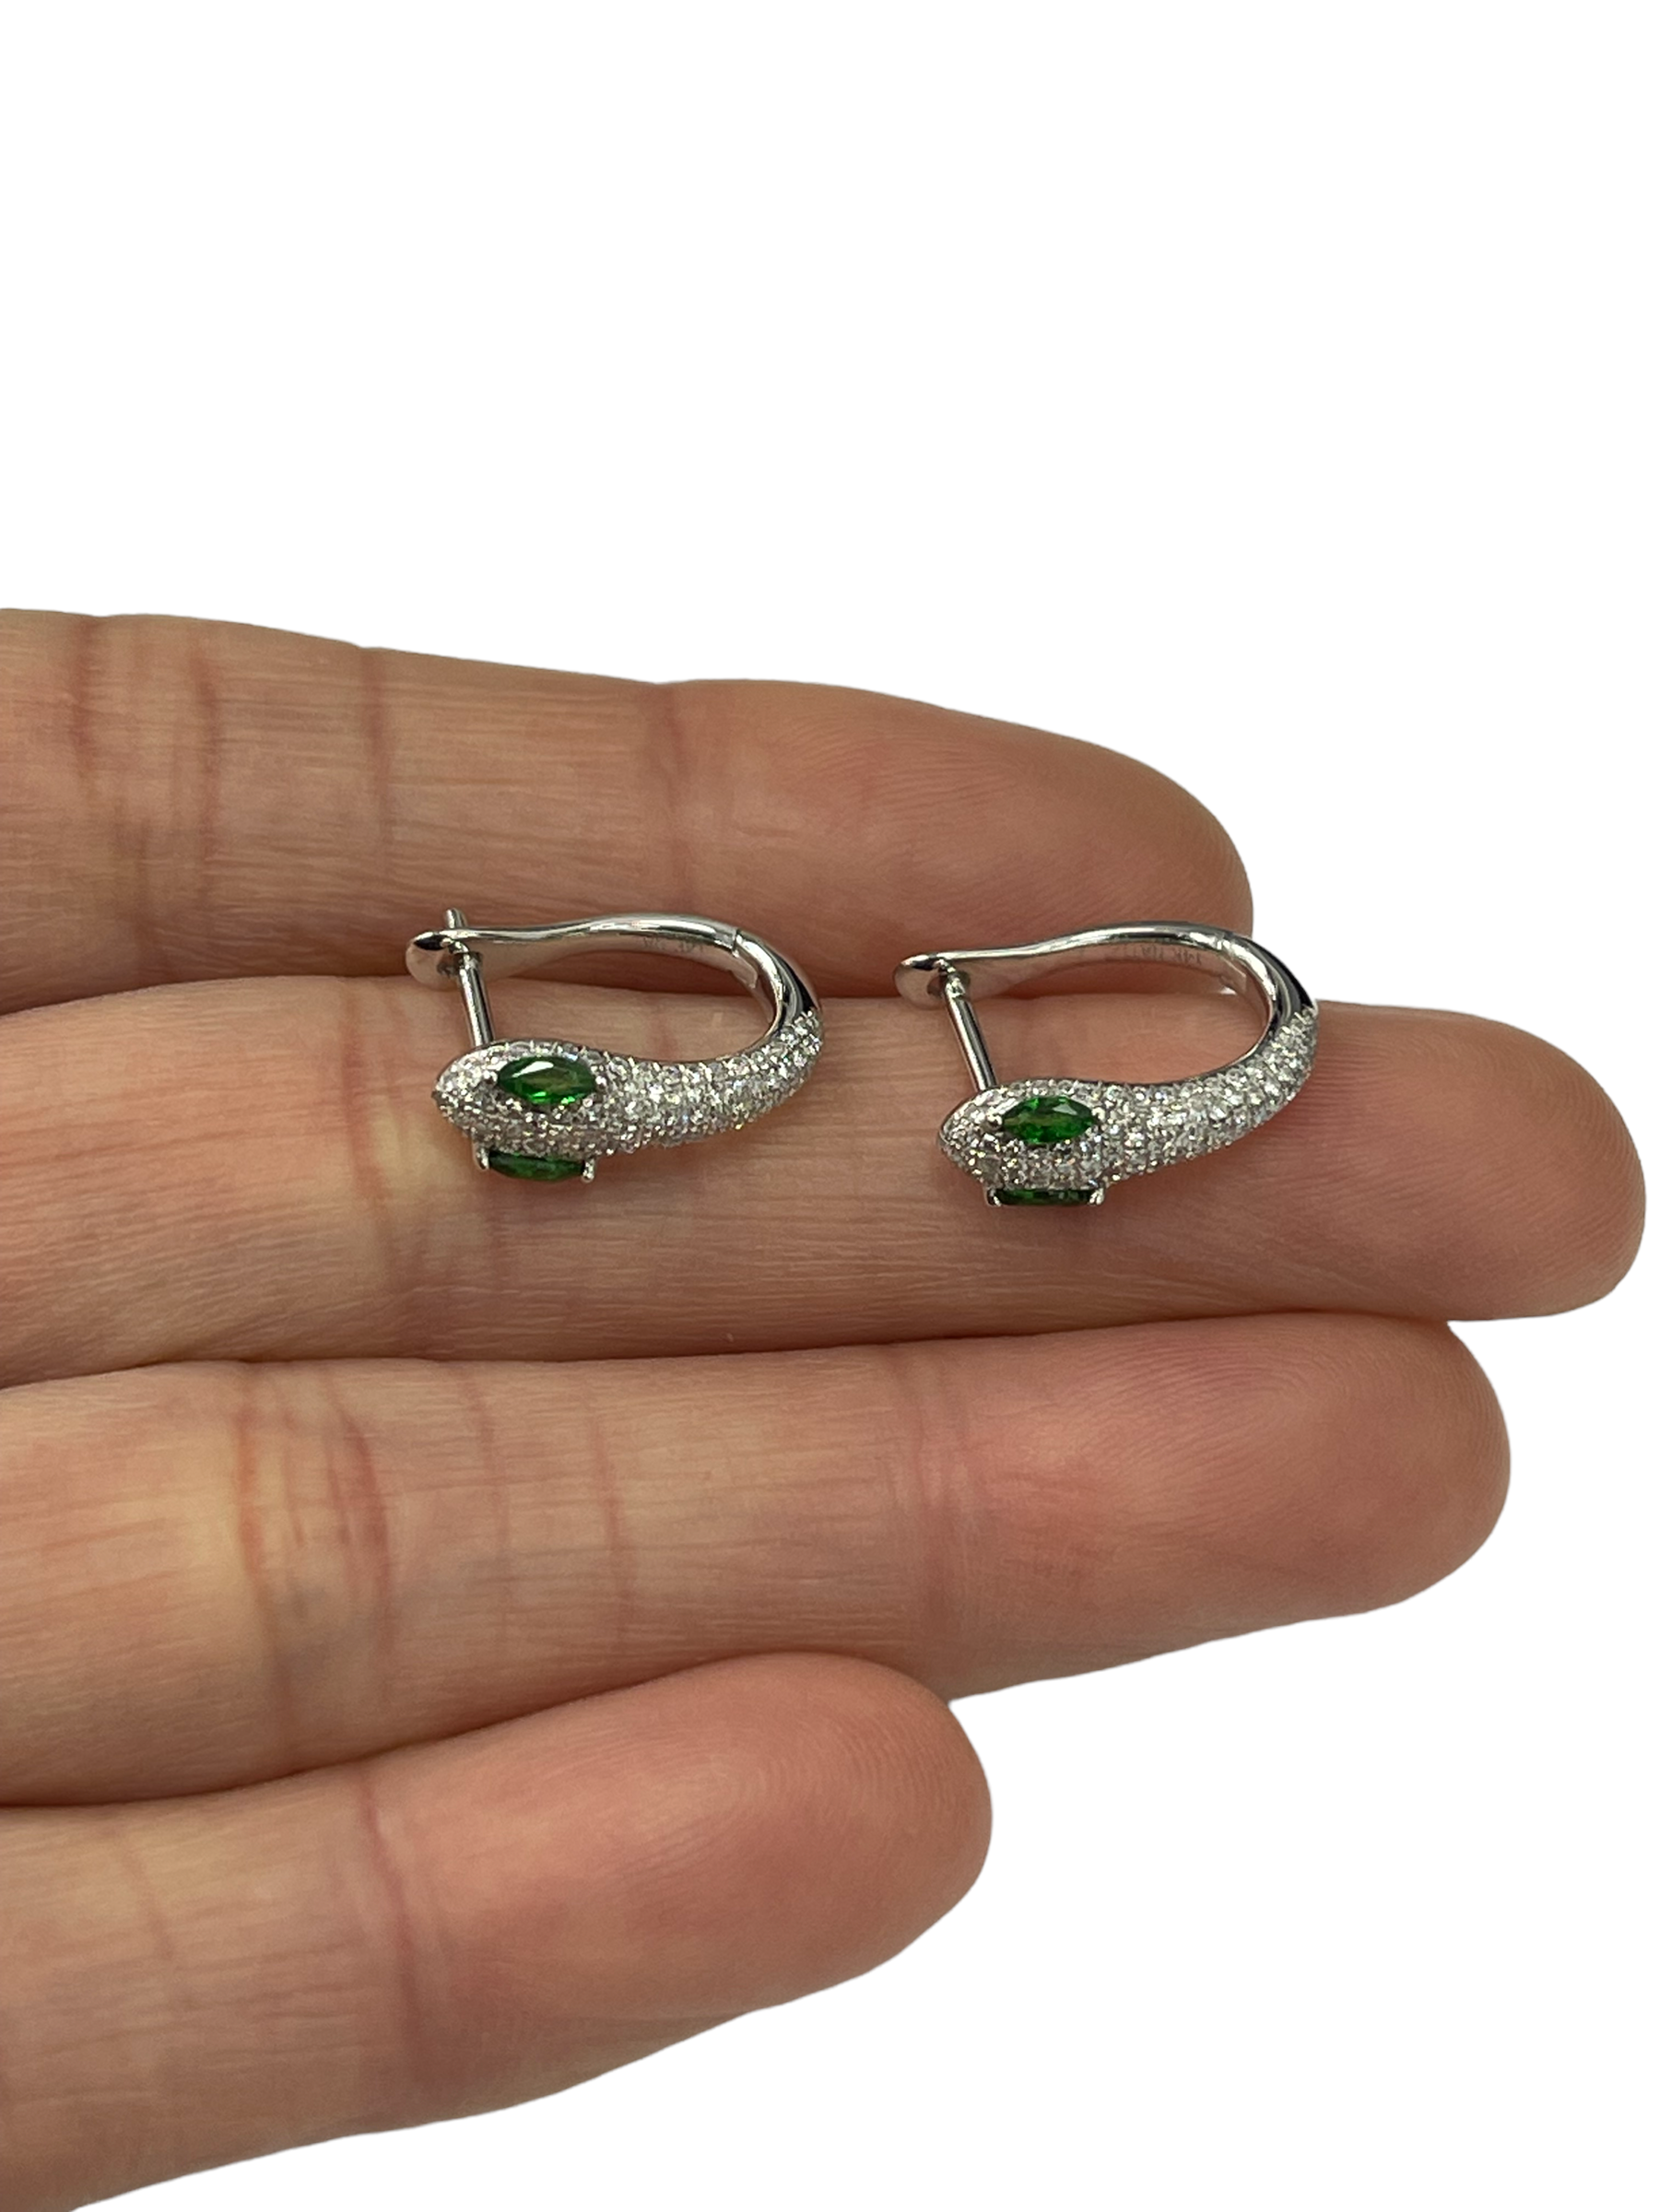 Micro Pave Diamond Serpent Huggie Earrings 14kt White Gold